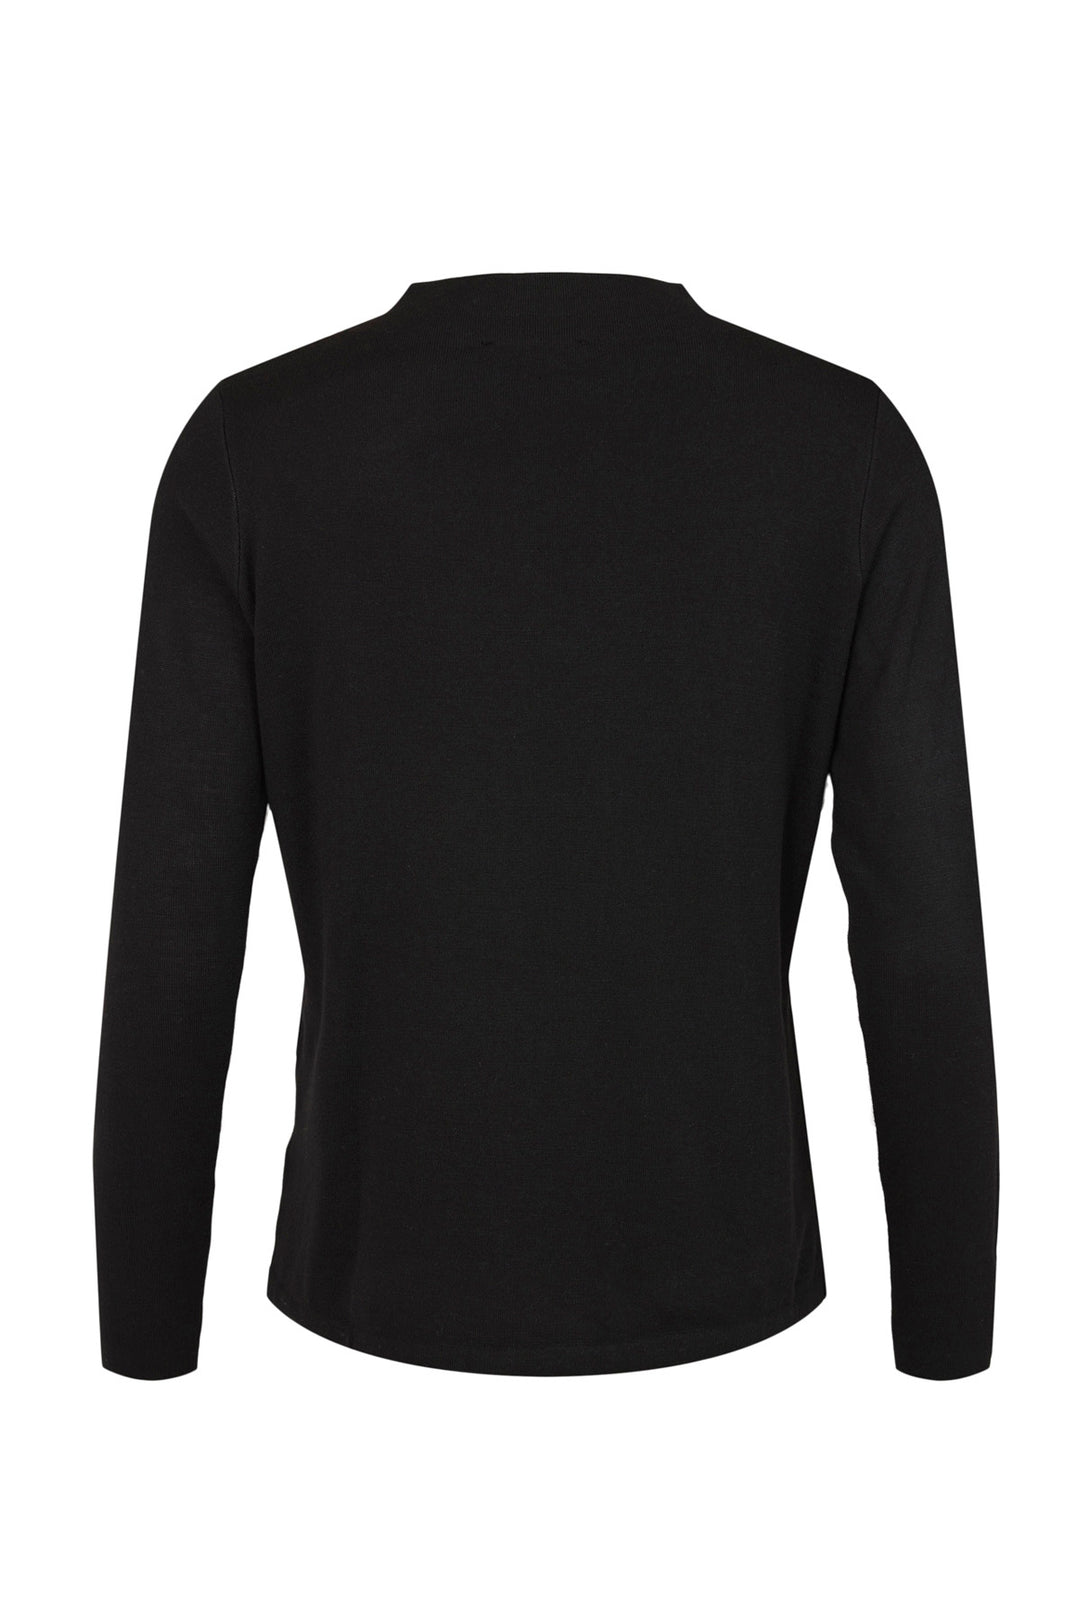 "I'cona Diamante Stripe Sweater - Style 64110-60002-90 (Black / Ivory)"